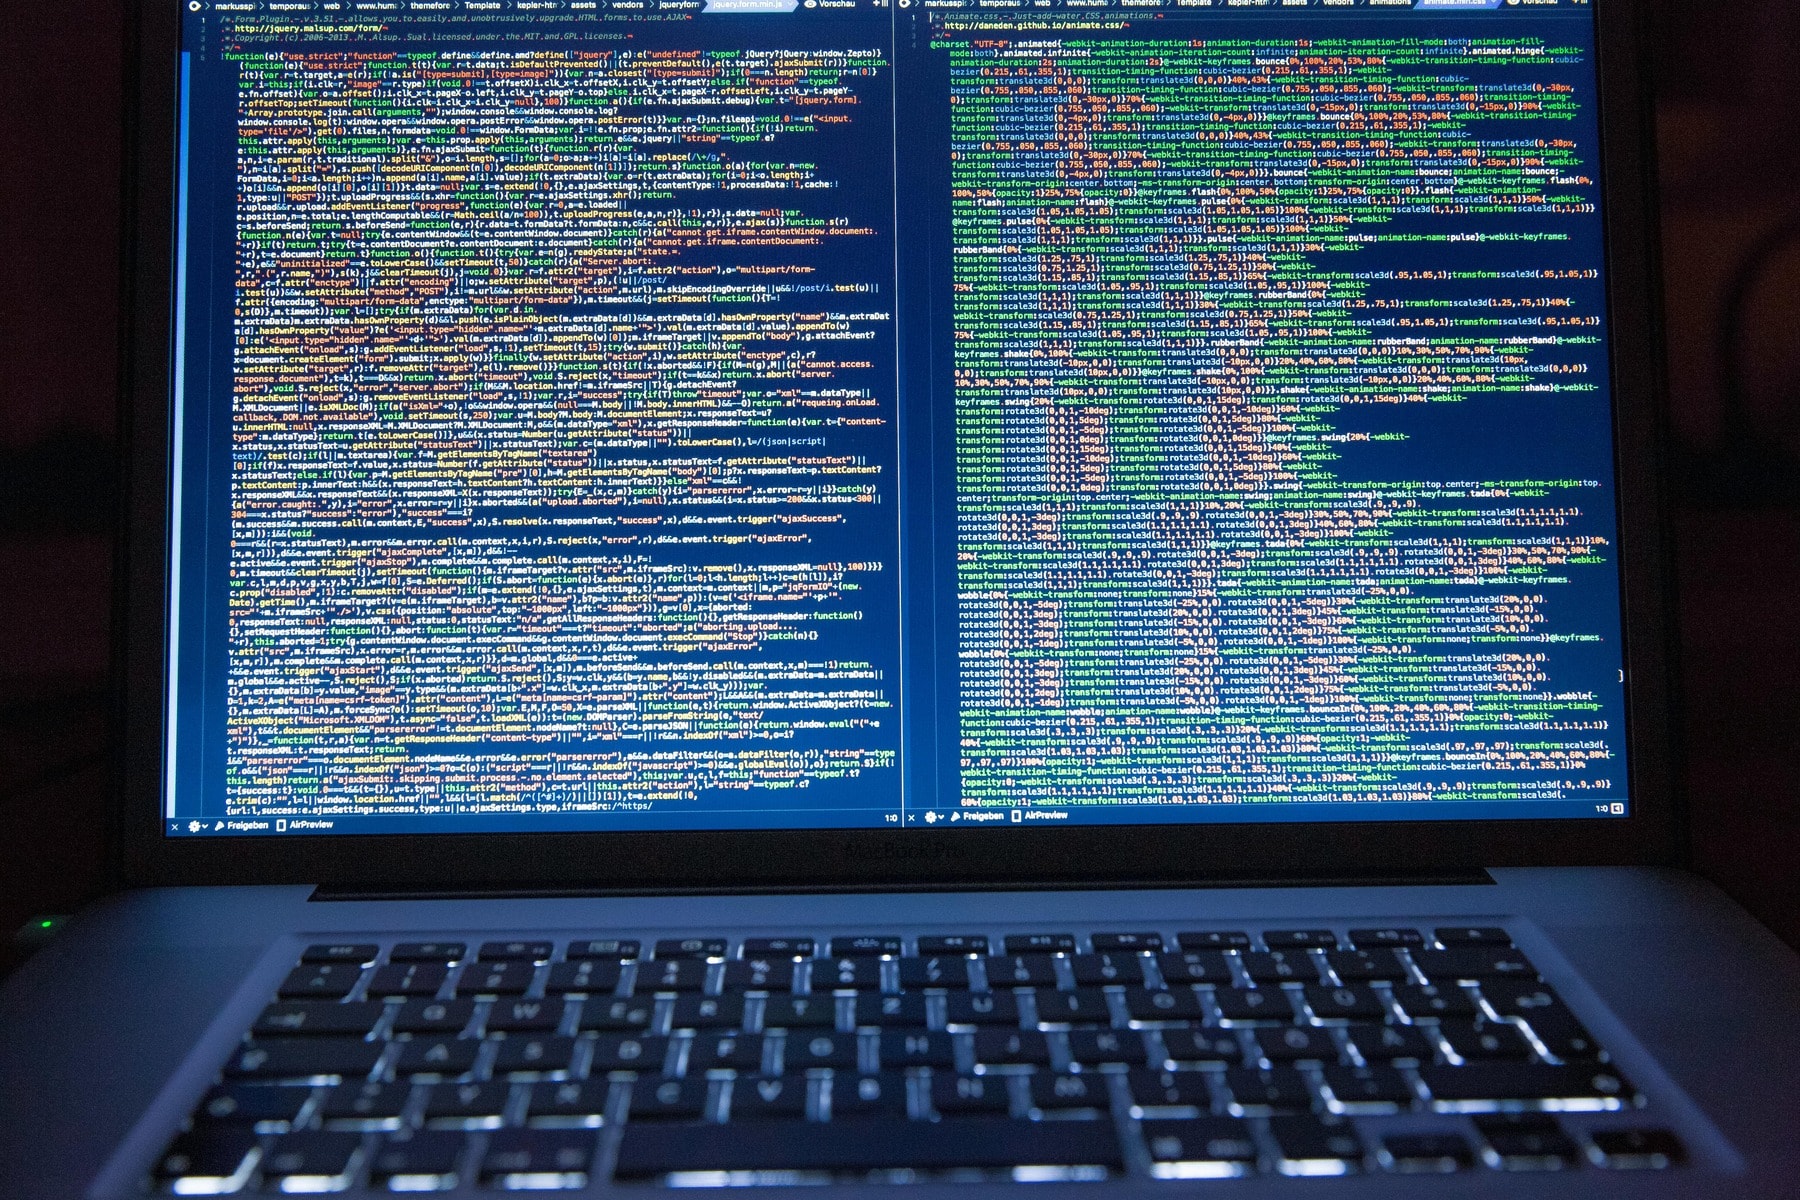 Laptop screen showing program codes